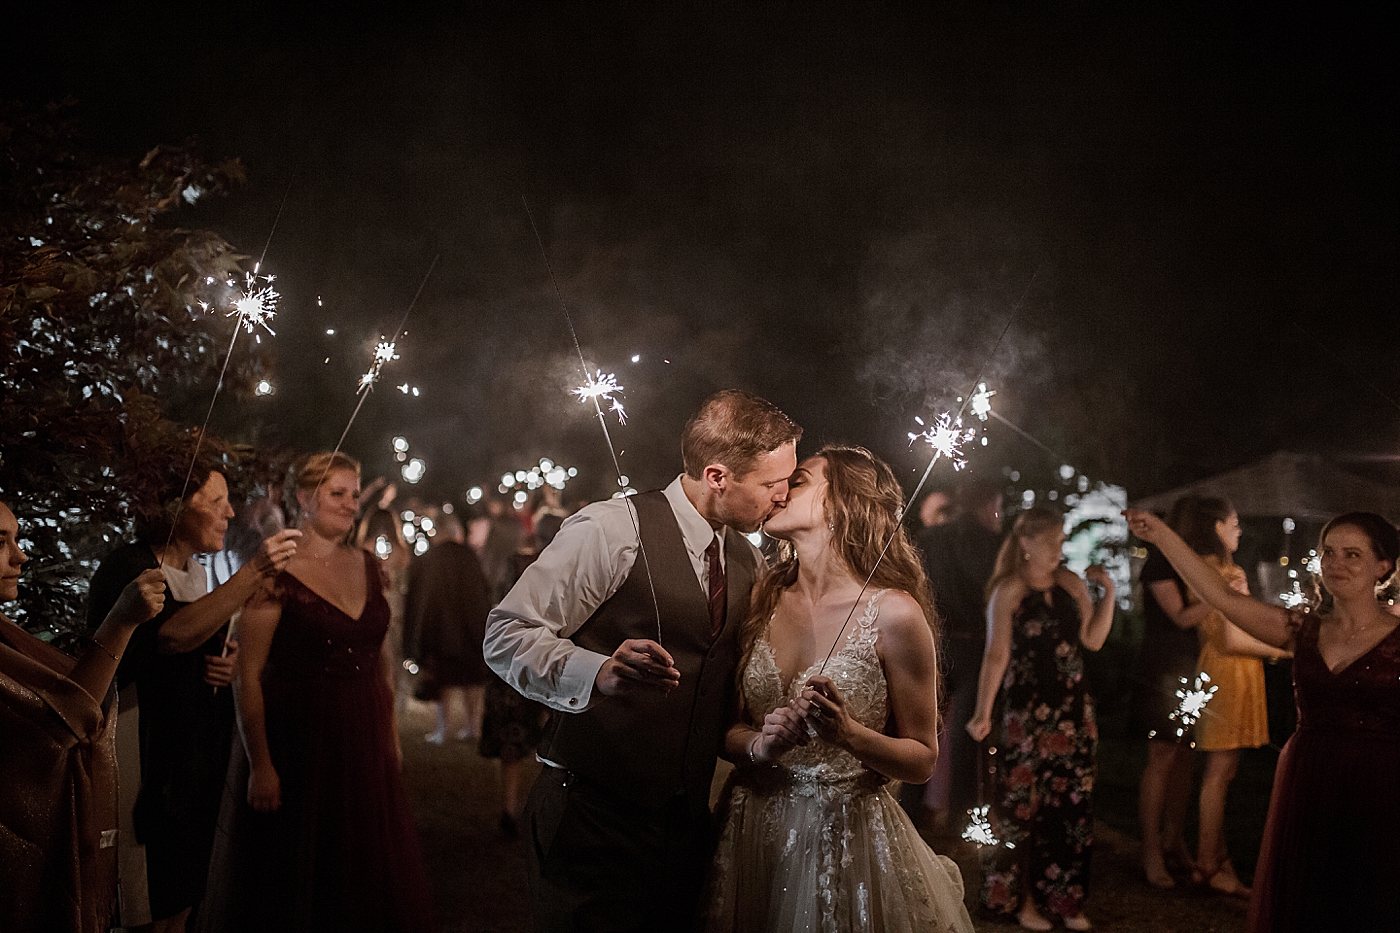 Sparkler exit at Cedar Springs wedding venue in Port Orchard, WA | Megan Montalvo Photography